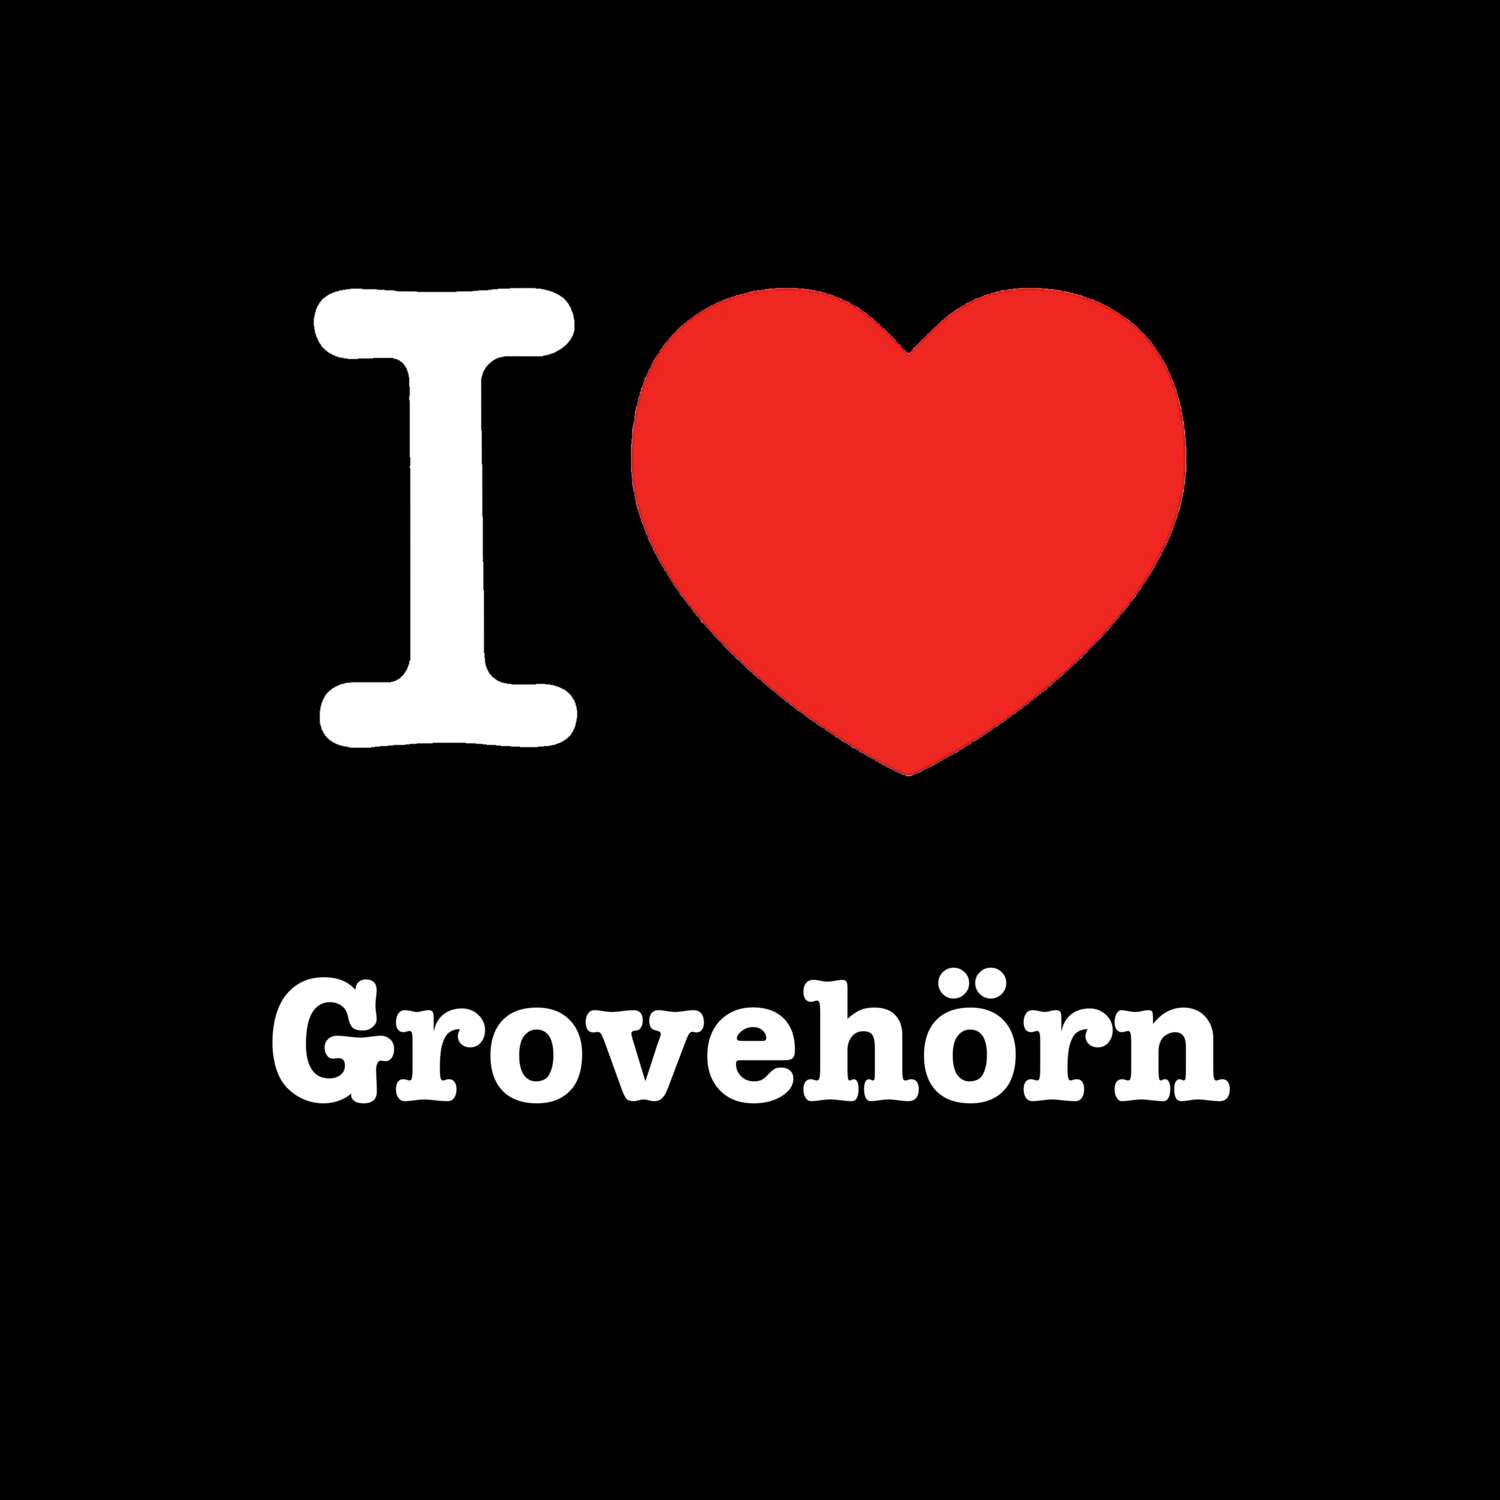 Grovehörn T-Shirt »I love«